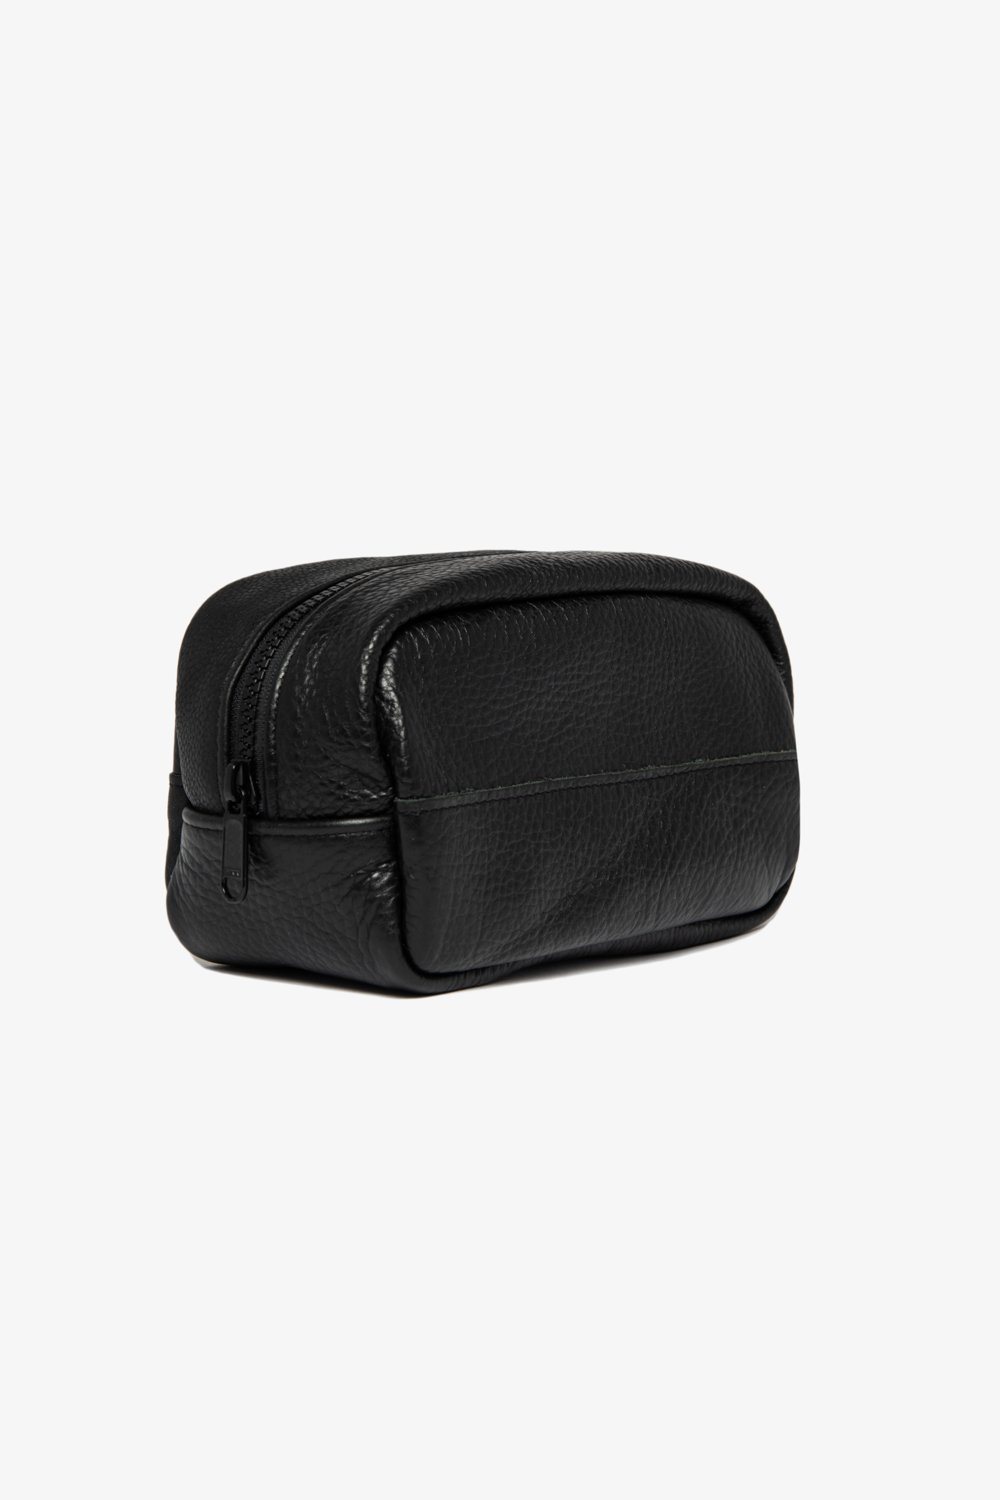 Massei Vachetta Leather Oscar Black Dopp Long Trip Toiletry Kit Bag Italy  NWOT